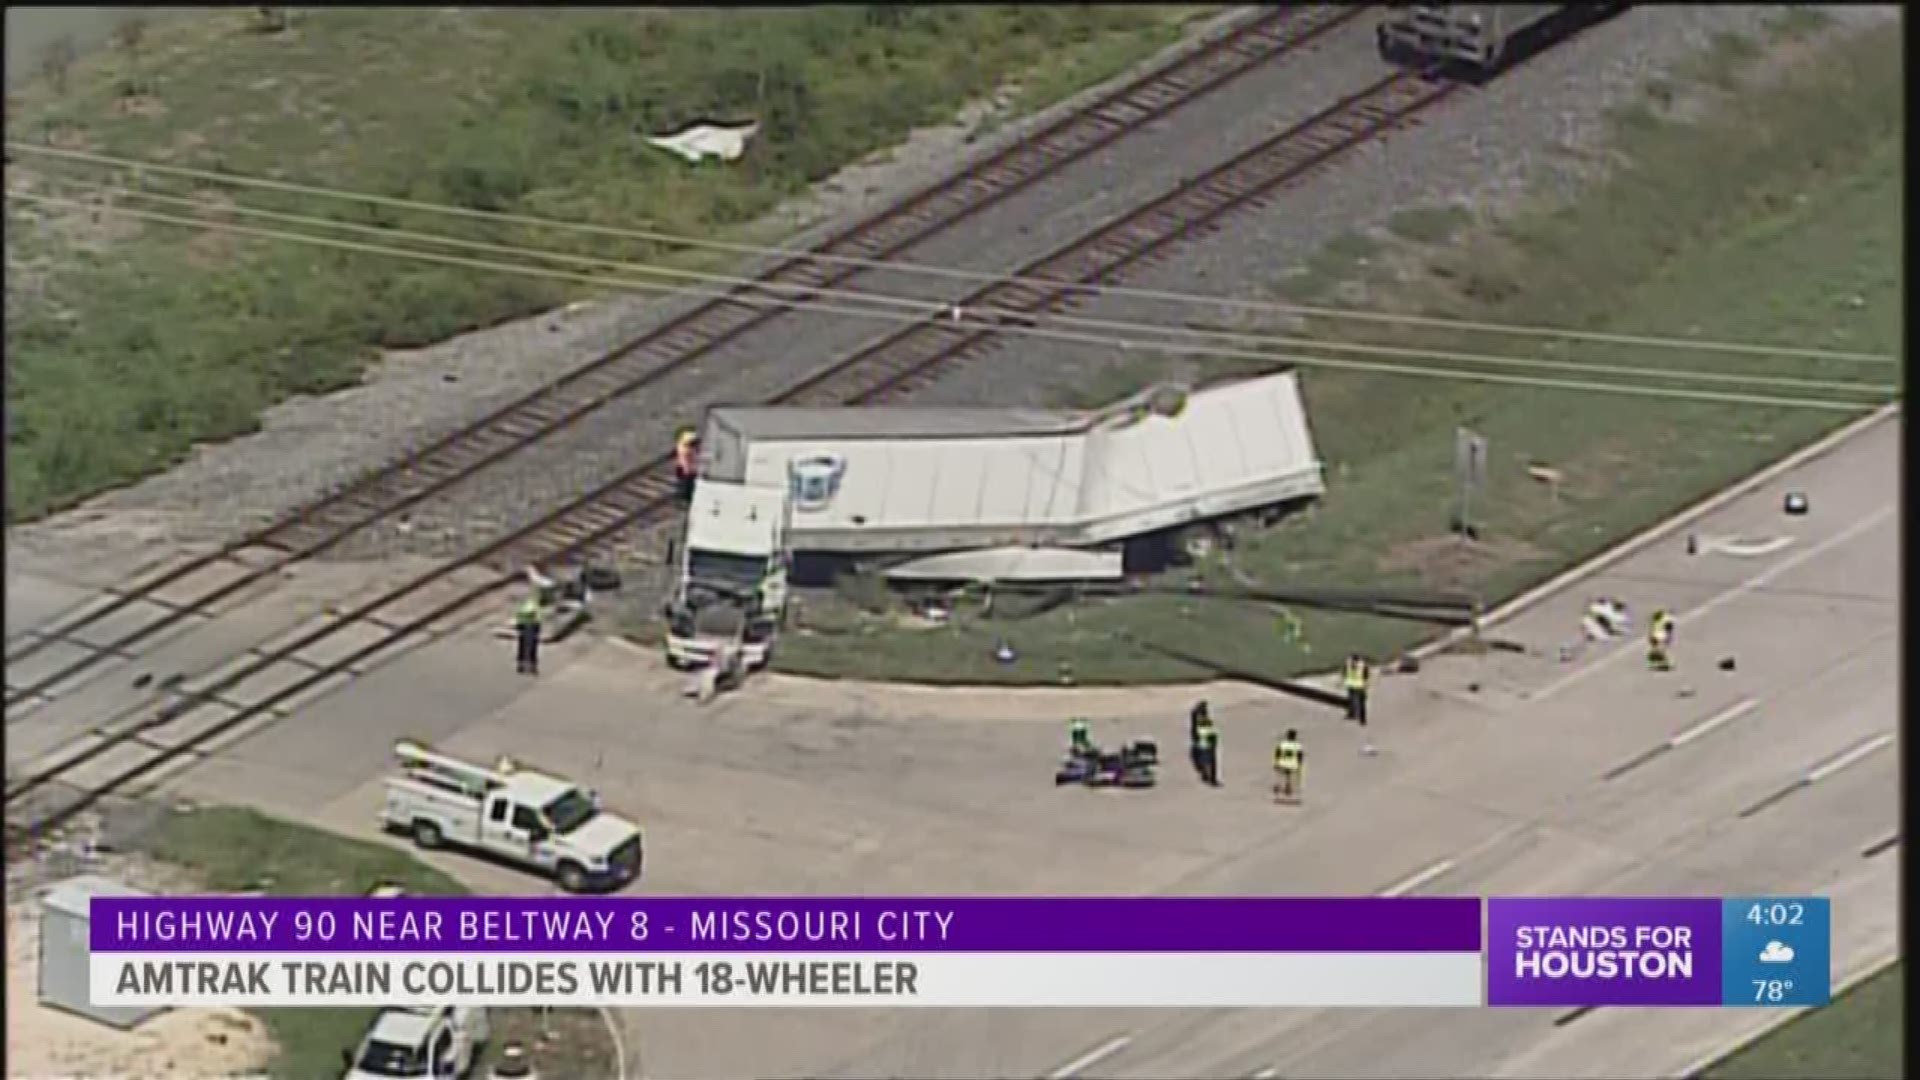 An Amtrak train stuck an 18-wheeler Friday in Missouri City, causing a major traffic backup.